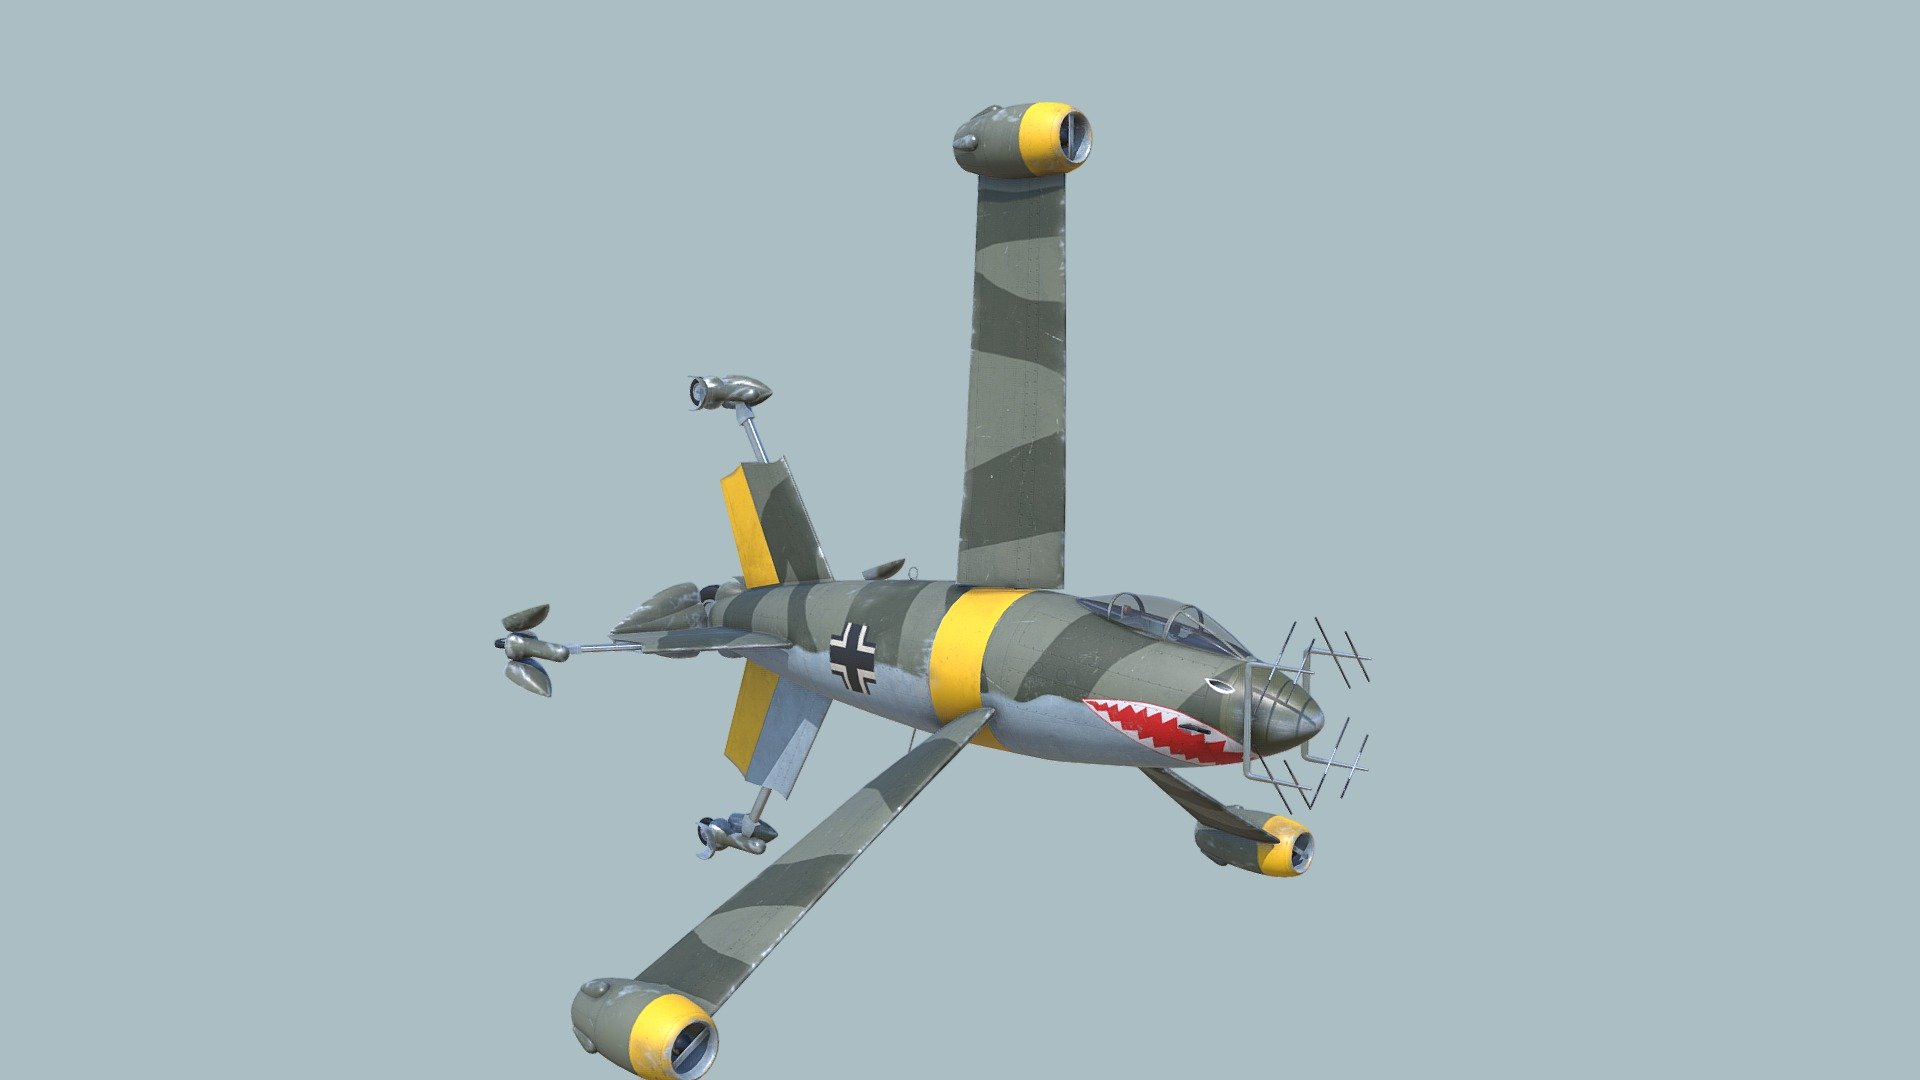 The Focke-Wulf Triebflügel, or Triebflügeljäger, literally meaning &ldquo;thrust-wing hunter